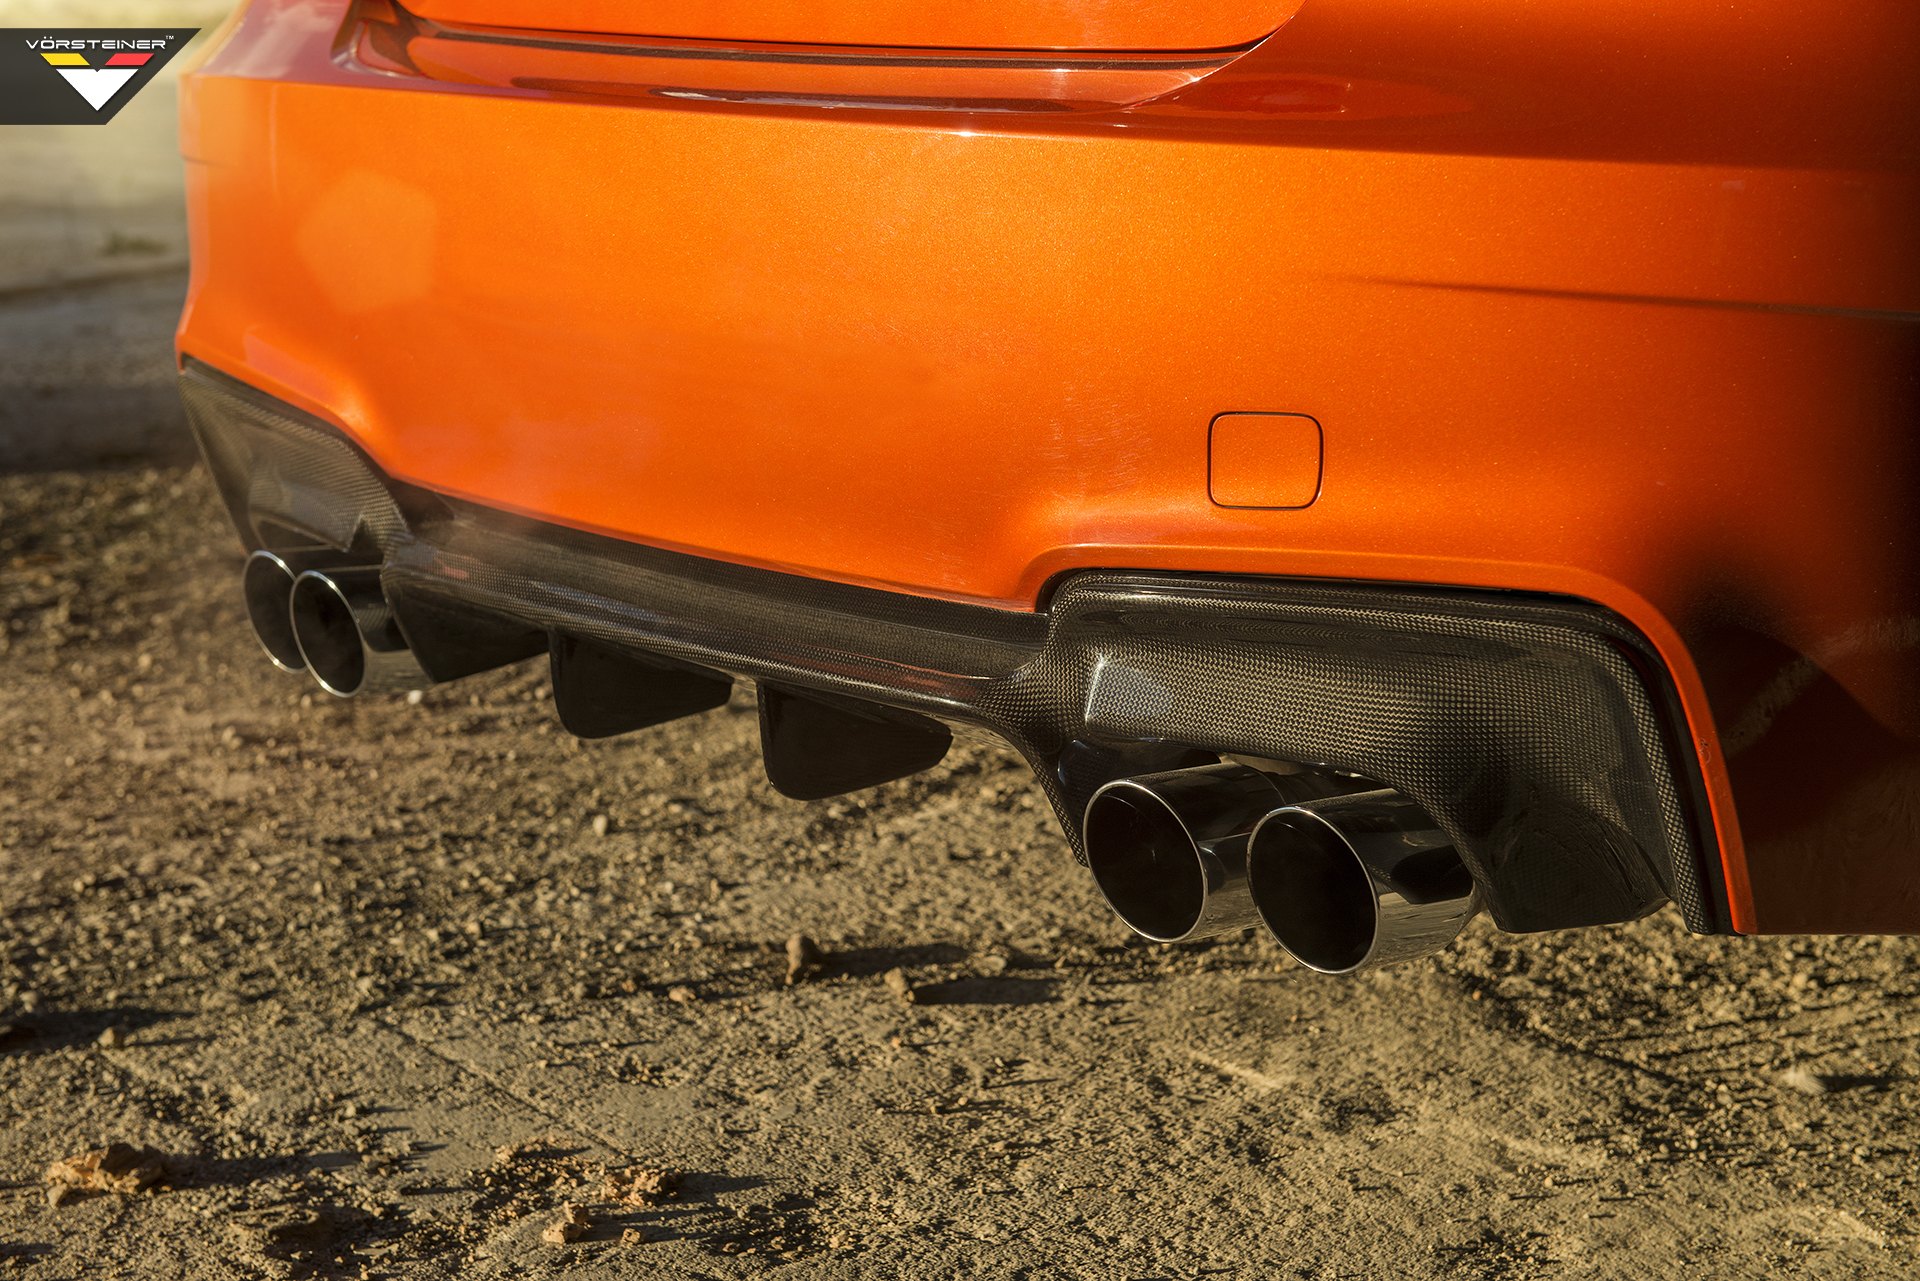 Carbon Fiber Rear Diffuser on Orange BMW 1-Series - Photo by Vorstiner